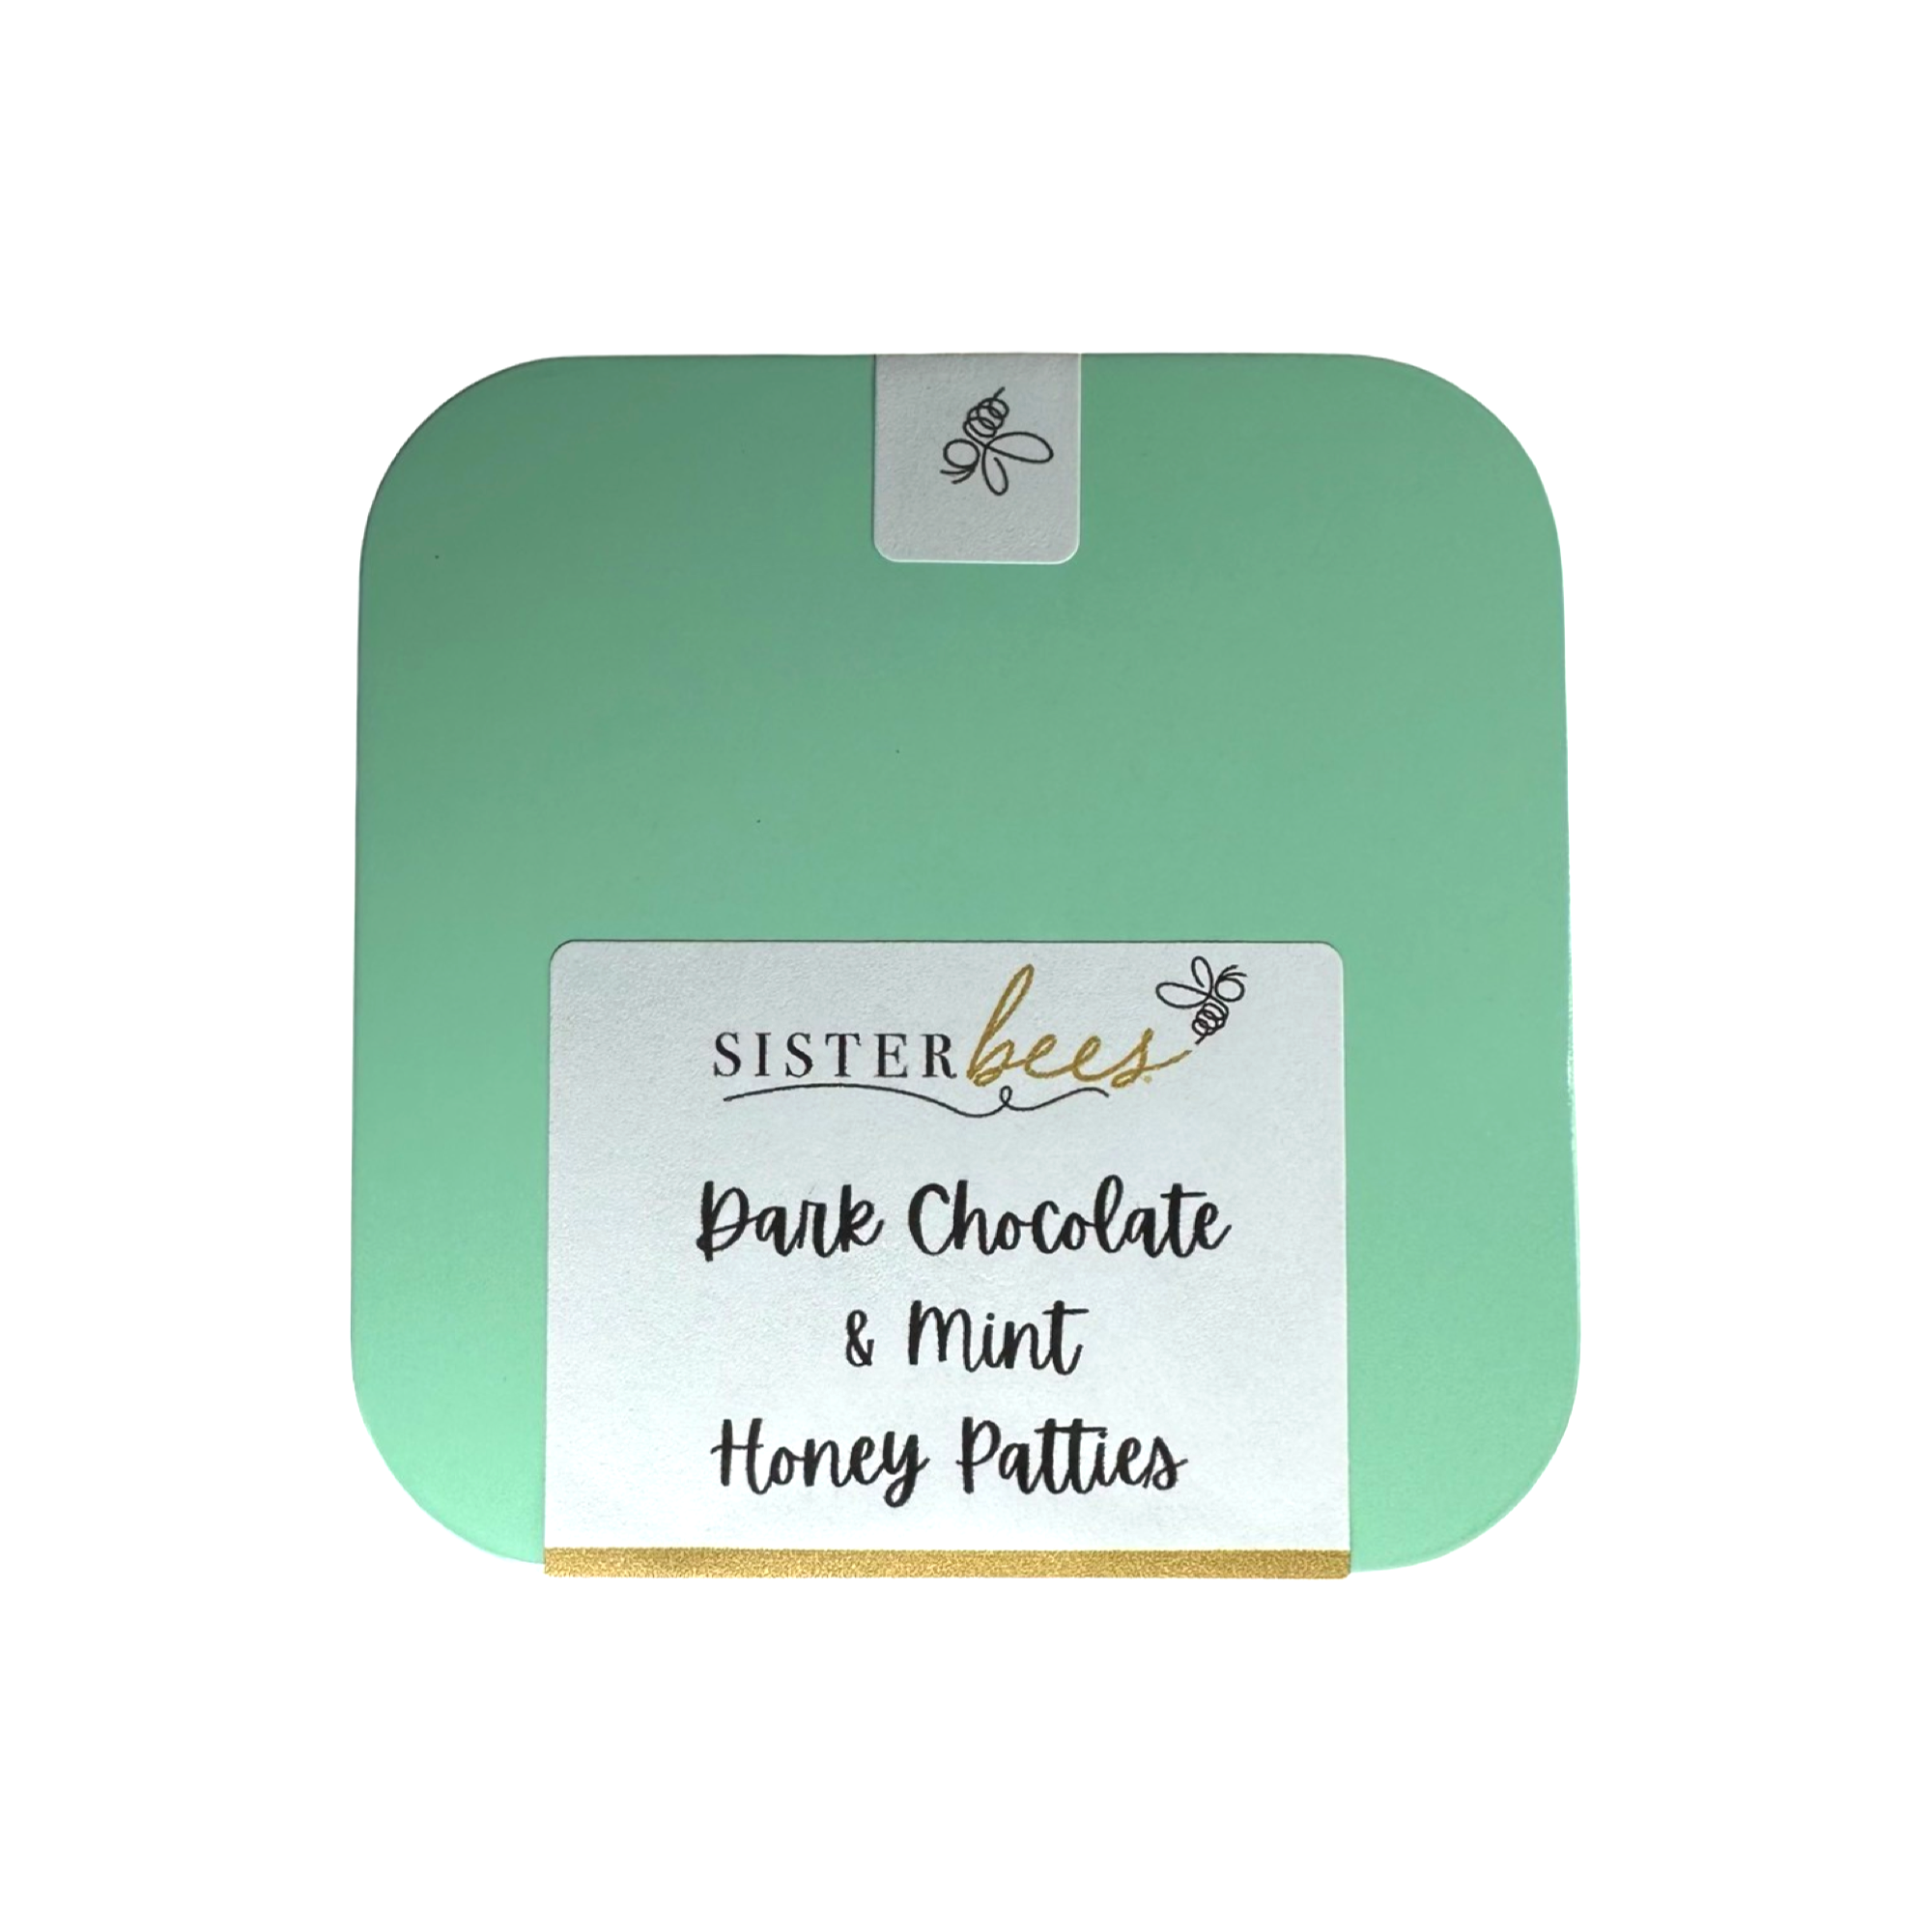 Dark Chocolate Mint Honey Patties